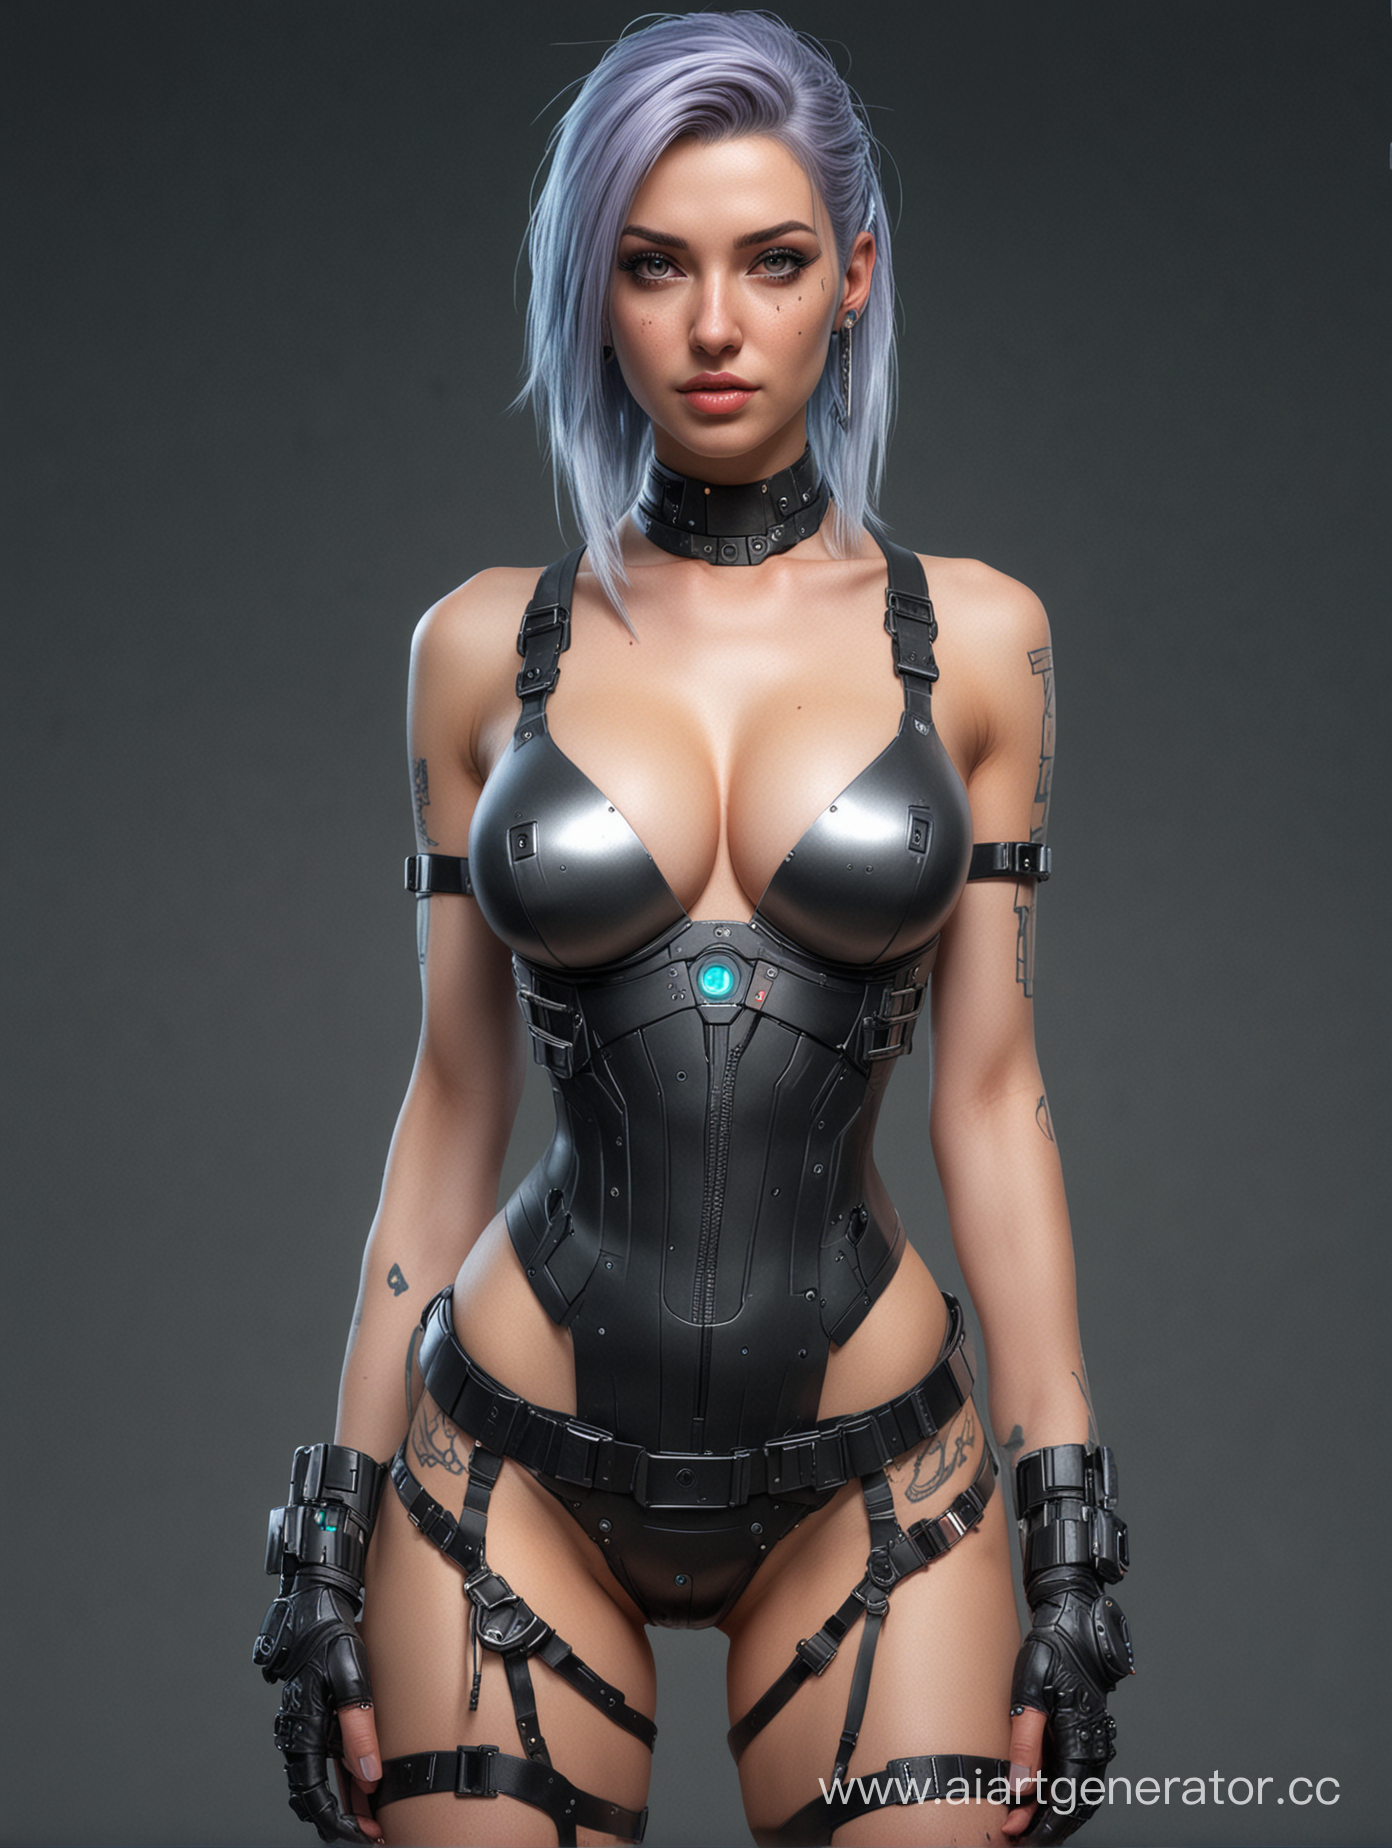 Beautiful realistic full-length cyberpunk girl in a bra